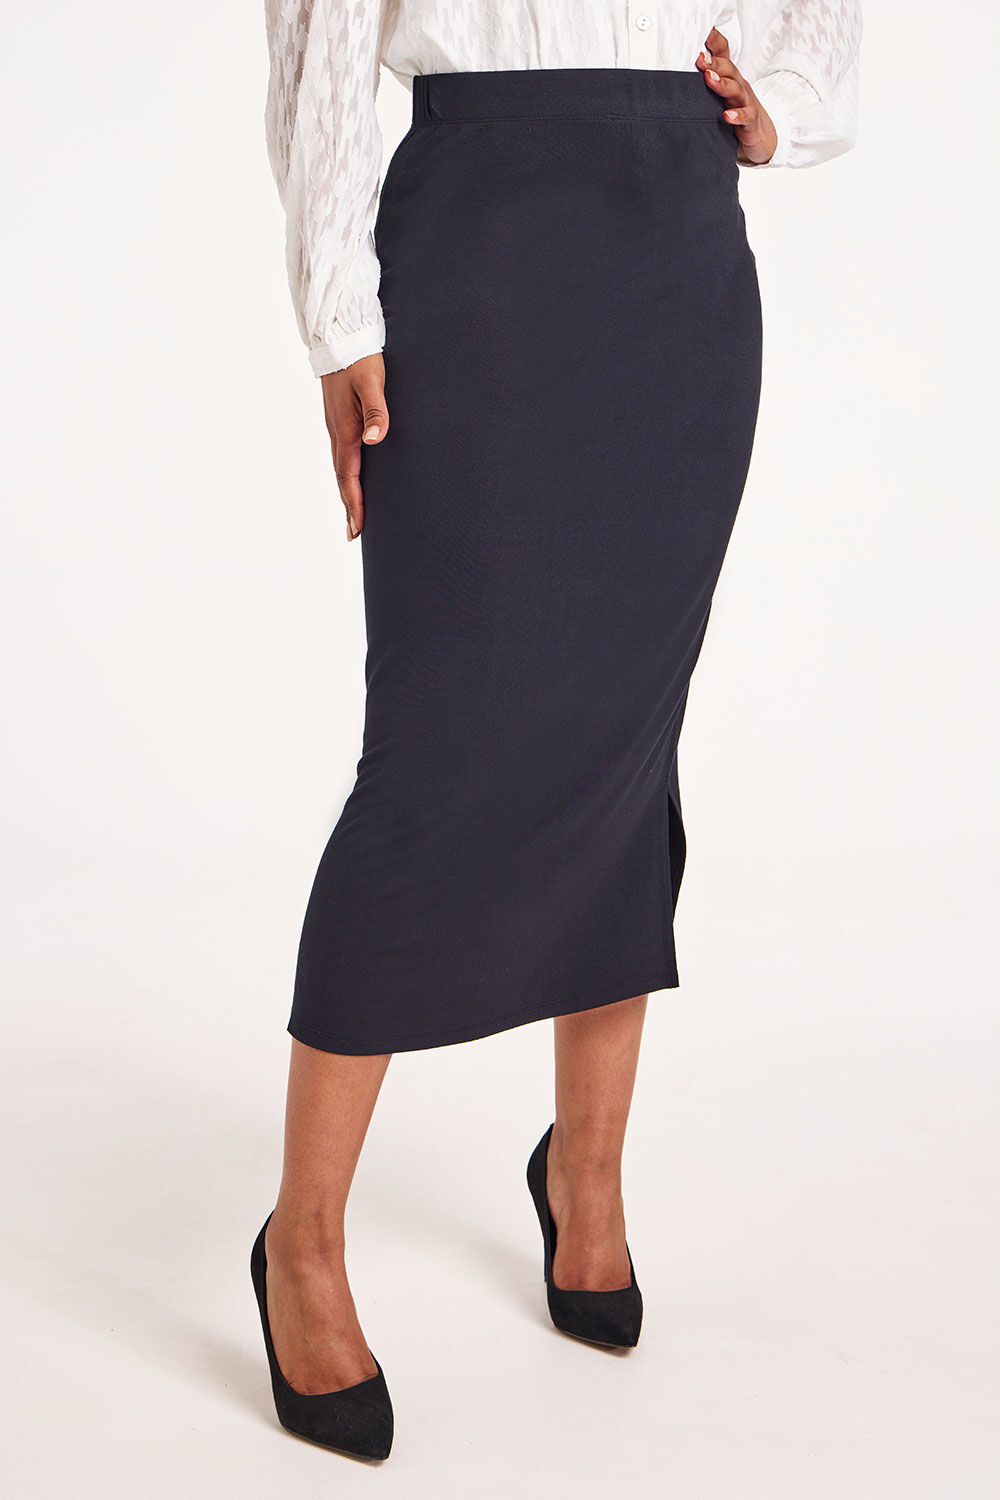 Bonmarche Black Plain Straight Jersey Elasticated Skirt, Size: 14 - Holiday Shop